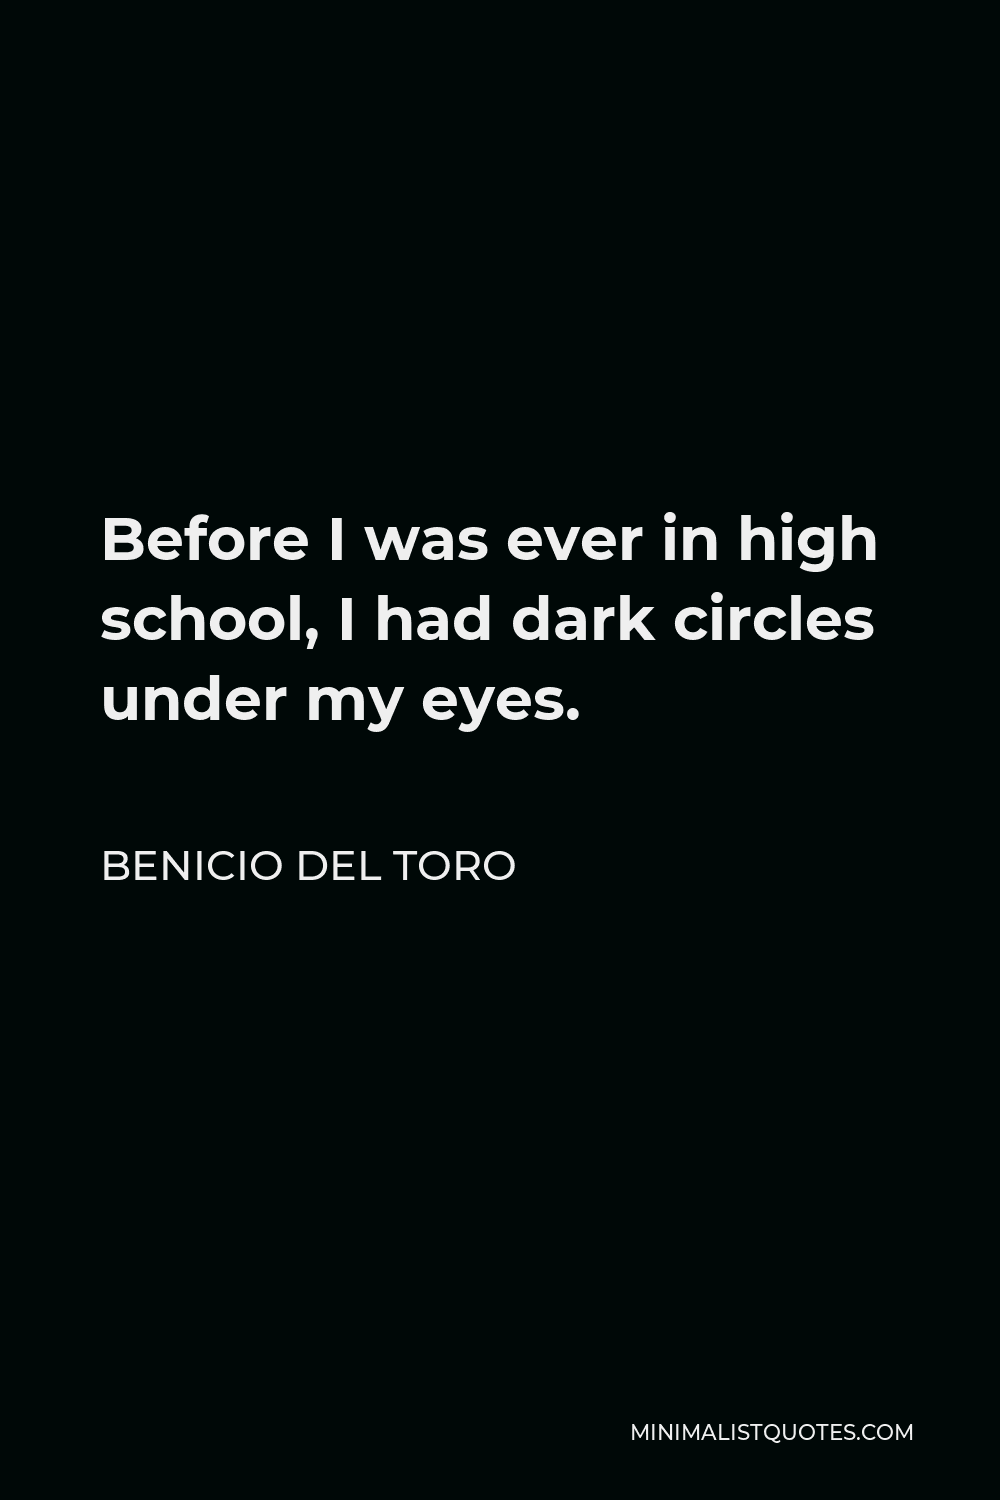 Benicio Del Toro Quote - Before I was ever in high school, I had dark circles under my eyes.